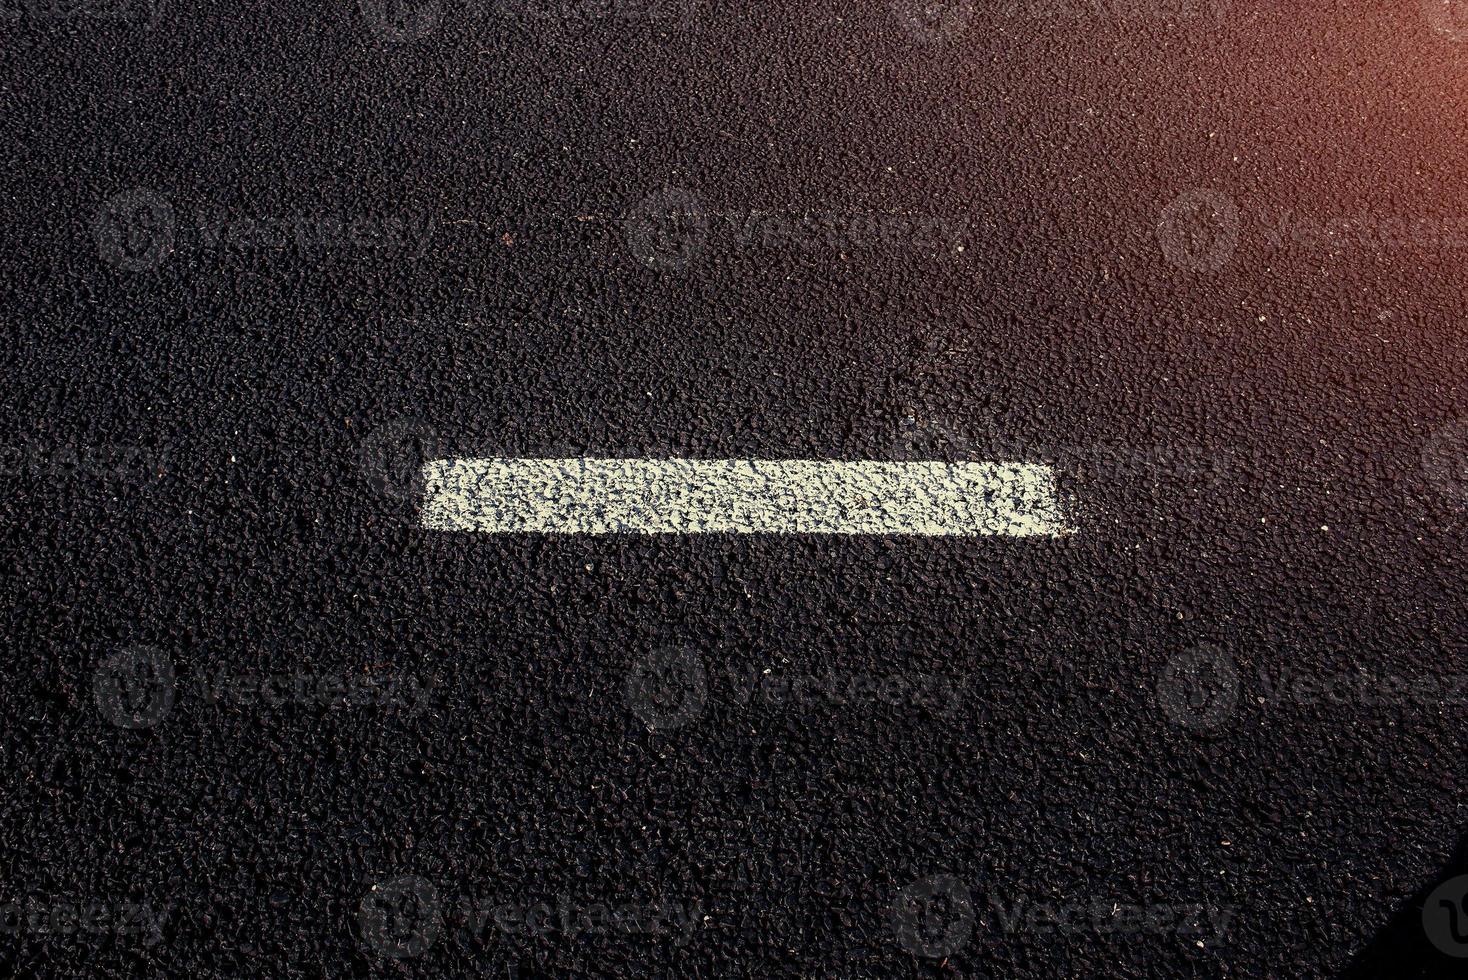 asfalt textur. ny med vit streckad linje foto